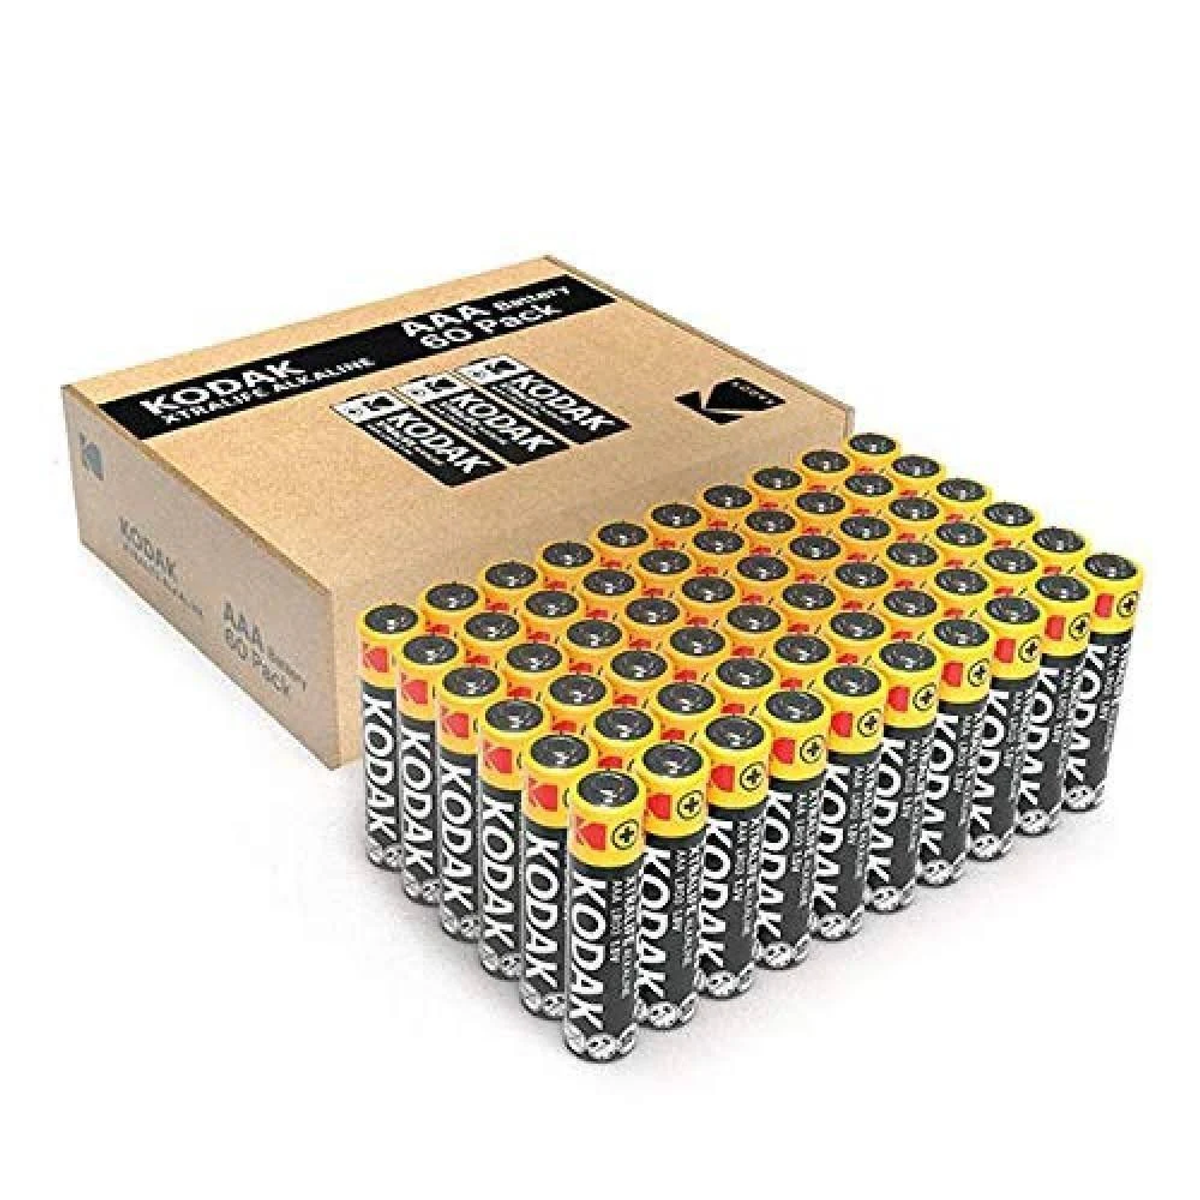 Batterien Mehrzweckbatterien, KODAK 30422643 (enthalten). Volt erforderlich AAA 60 1.5